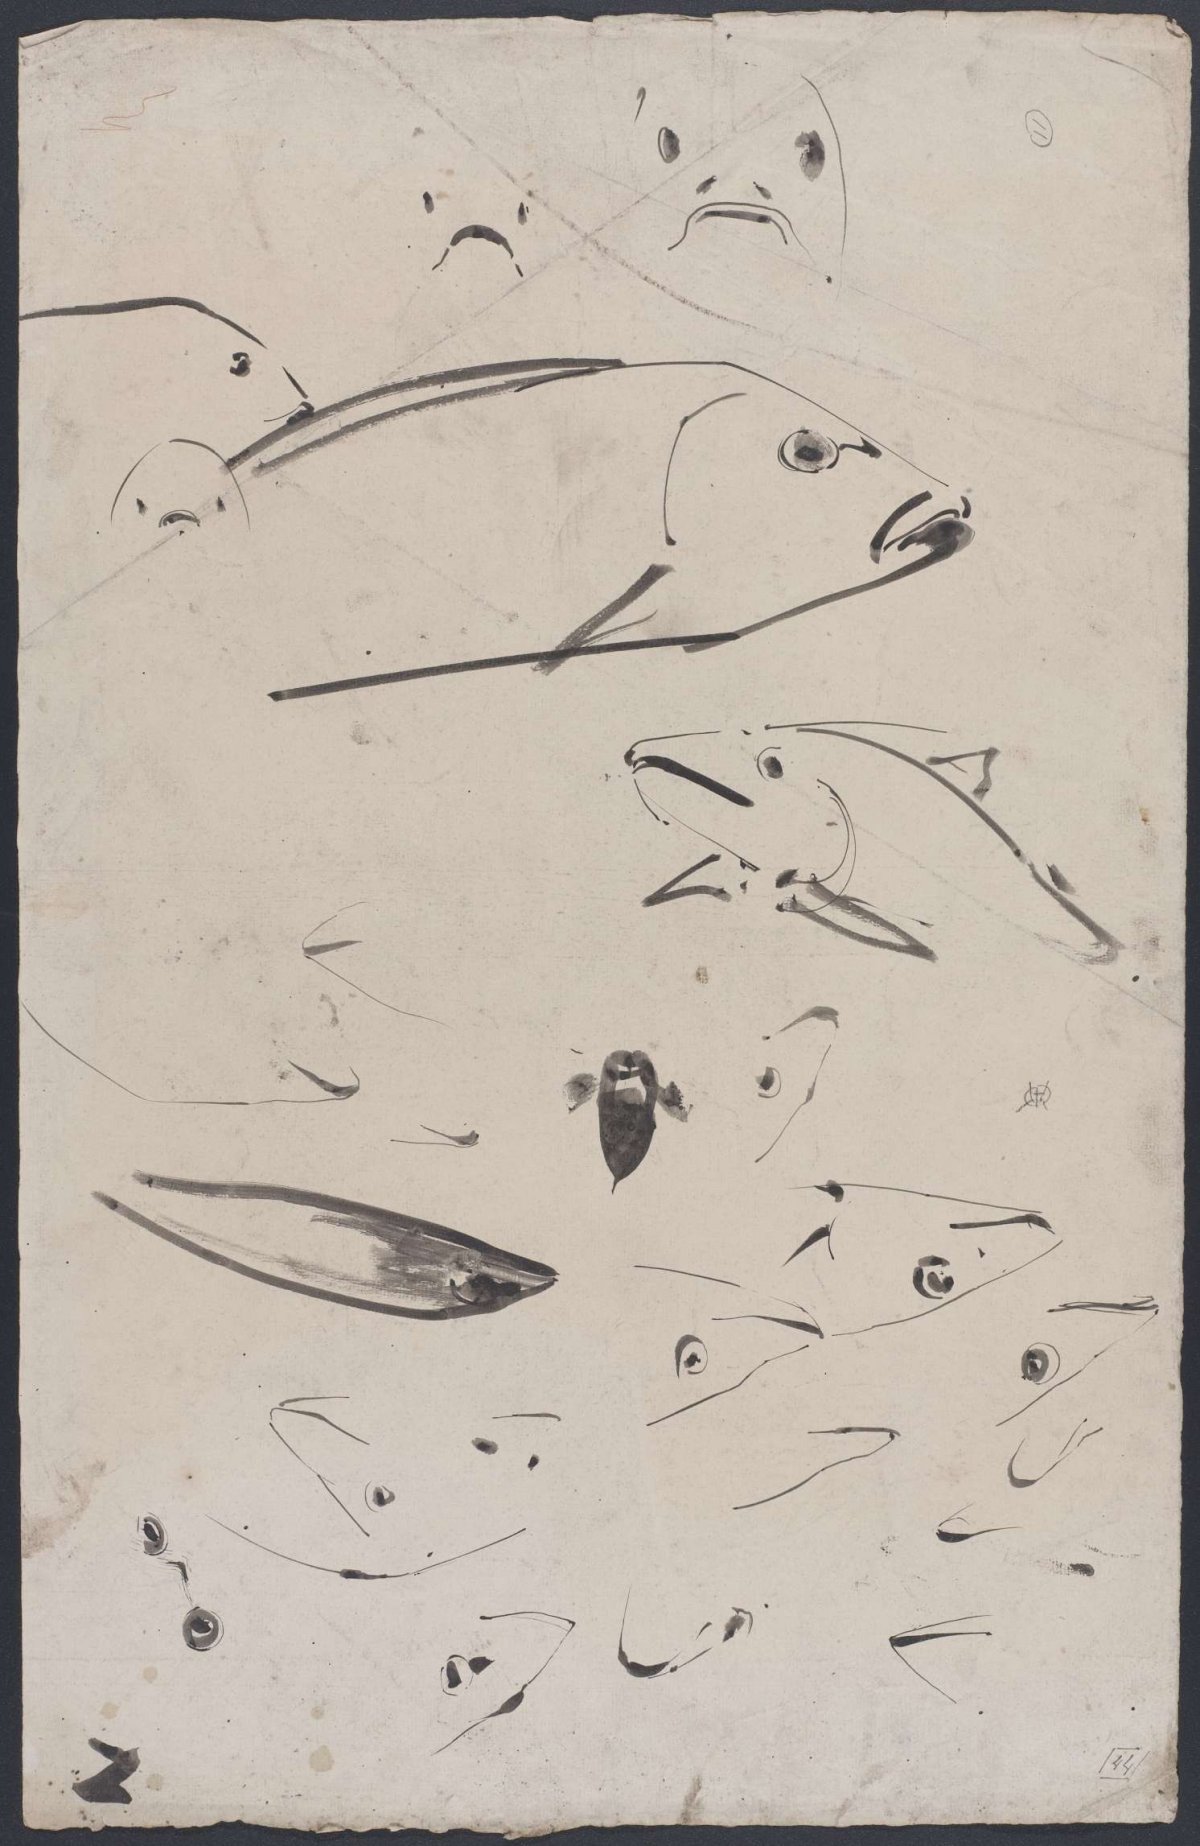 Sketch of fish, Gerrit Willem Dijsselhof, 1876 - 1924